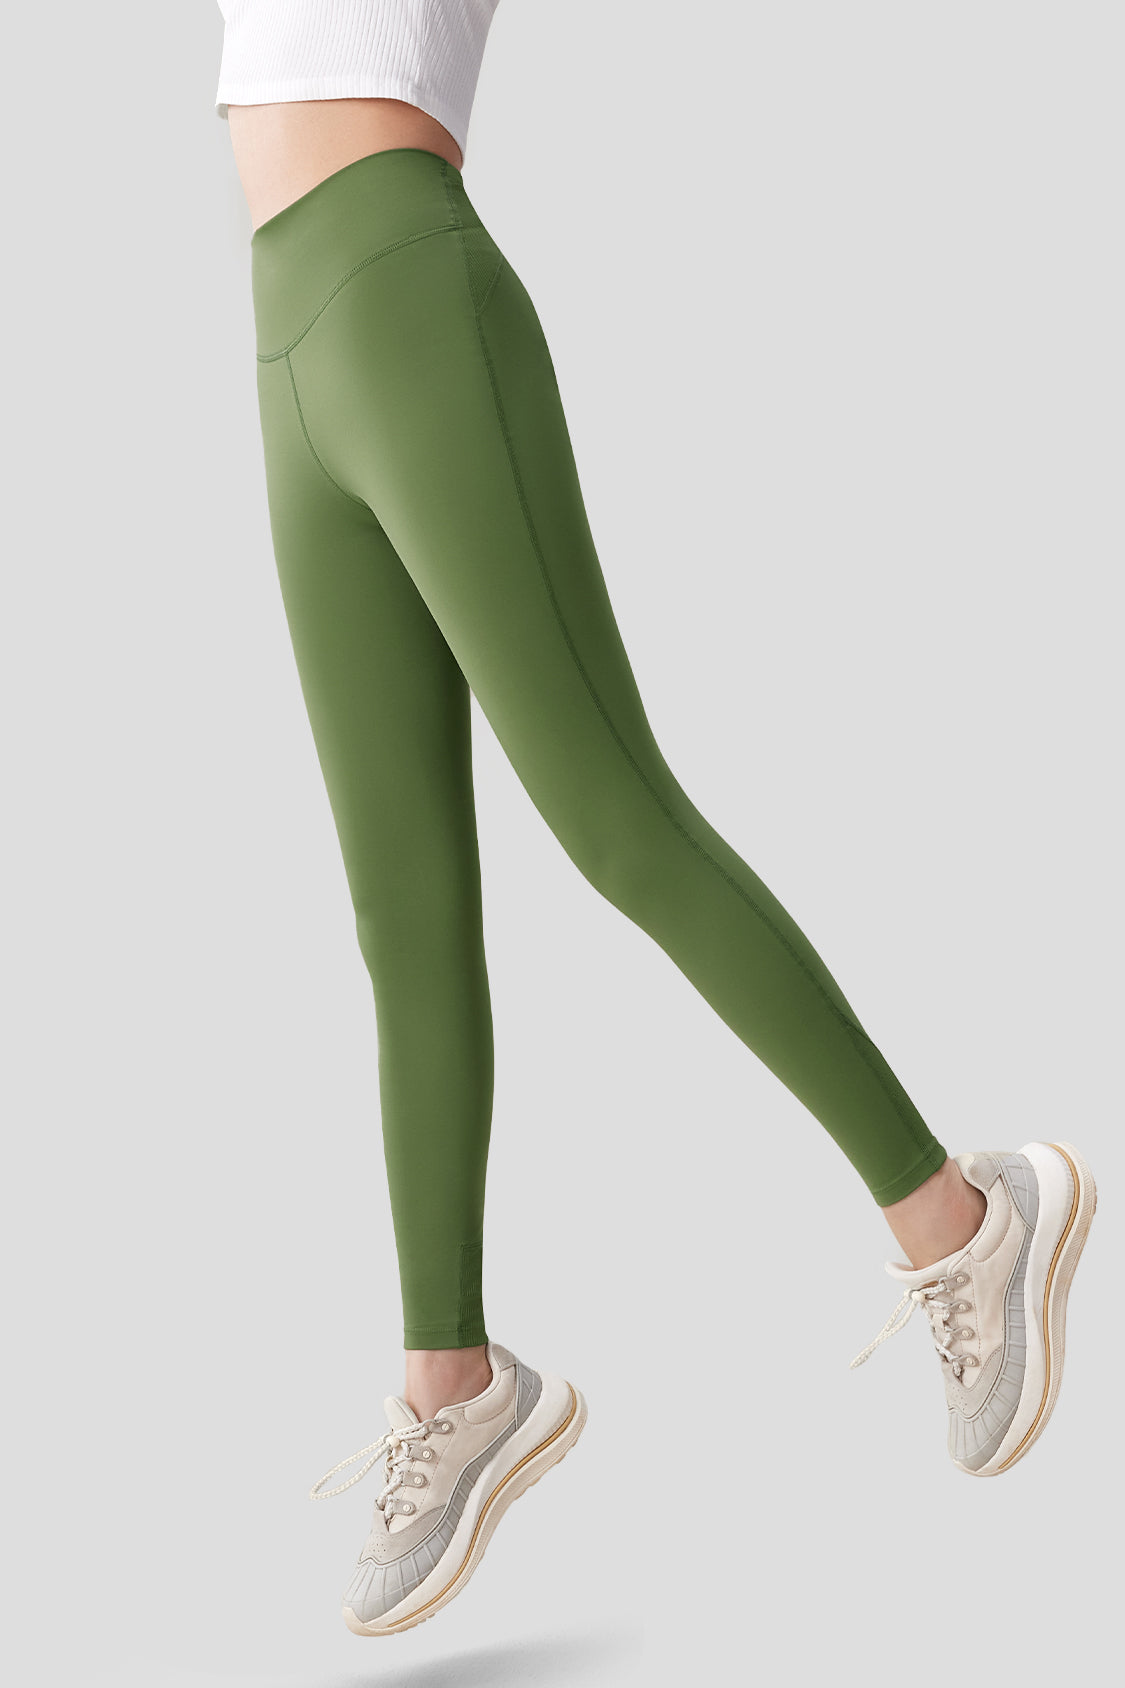 BENEUNDER Yoga Leggings High Waitst Seamless Active Workout Pants,  Black-shorts, Large : : Clothing, Shoes & Accessories